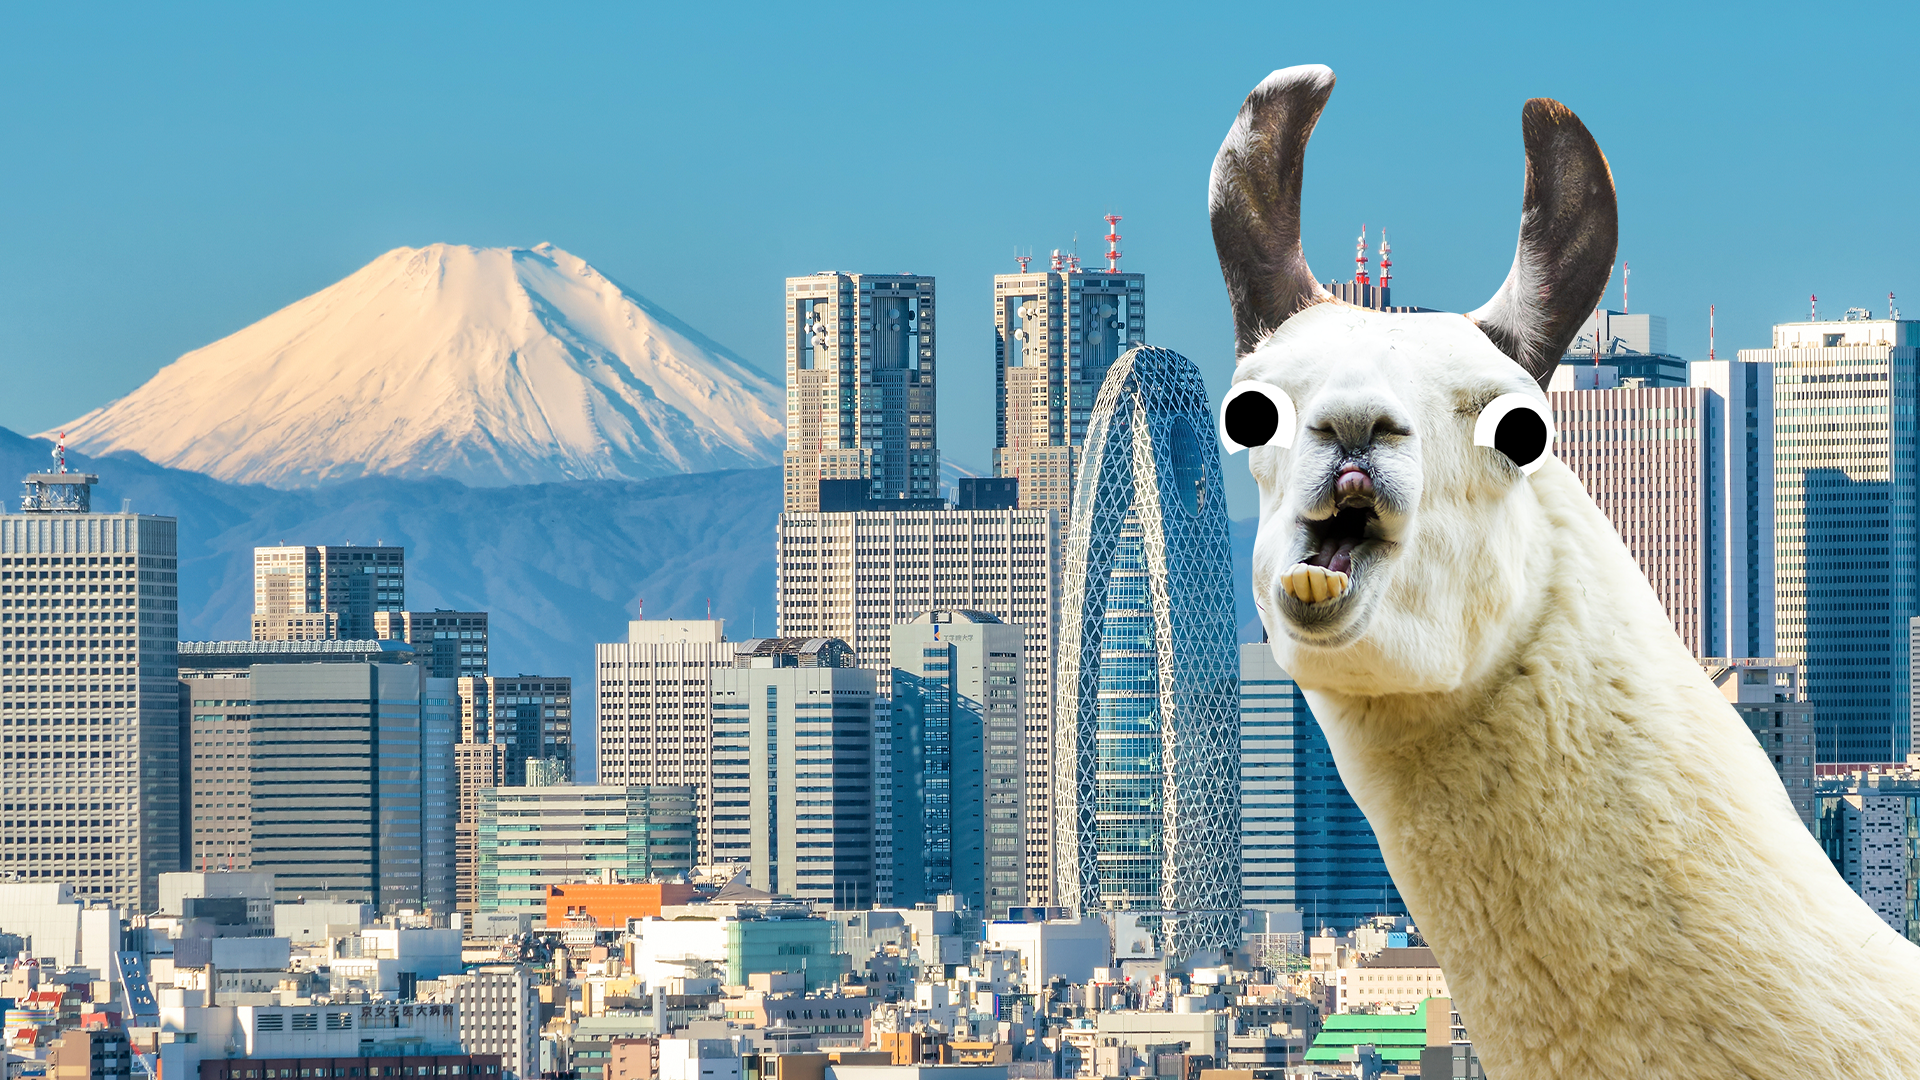 Tokyo cityscape with derpy llama